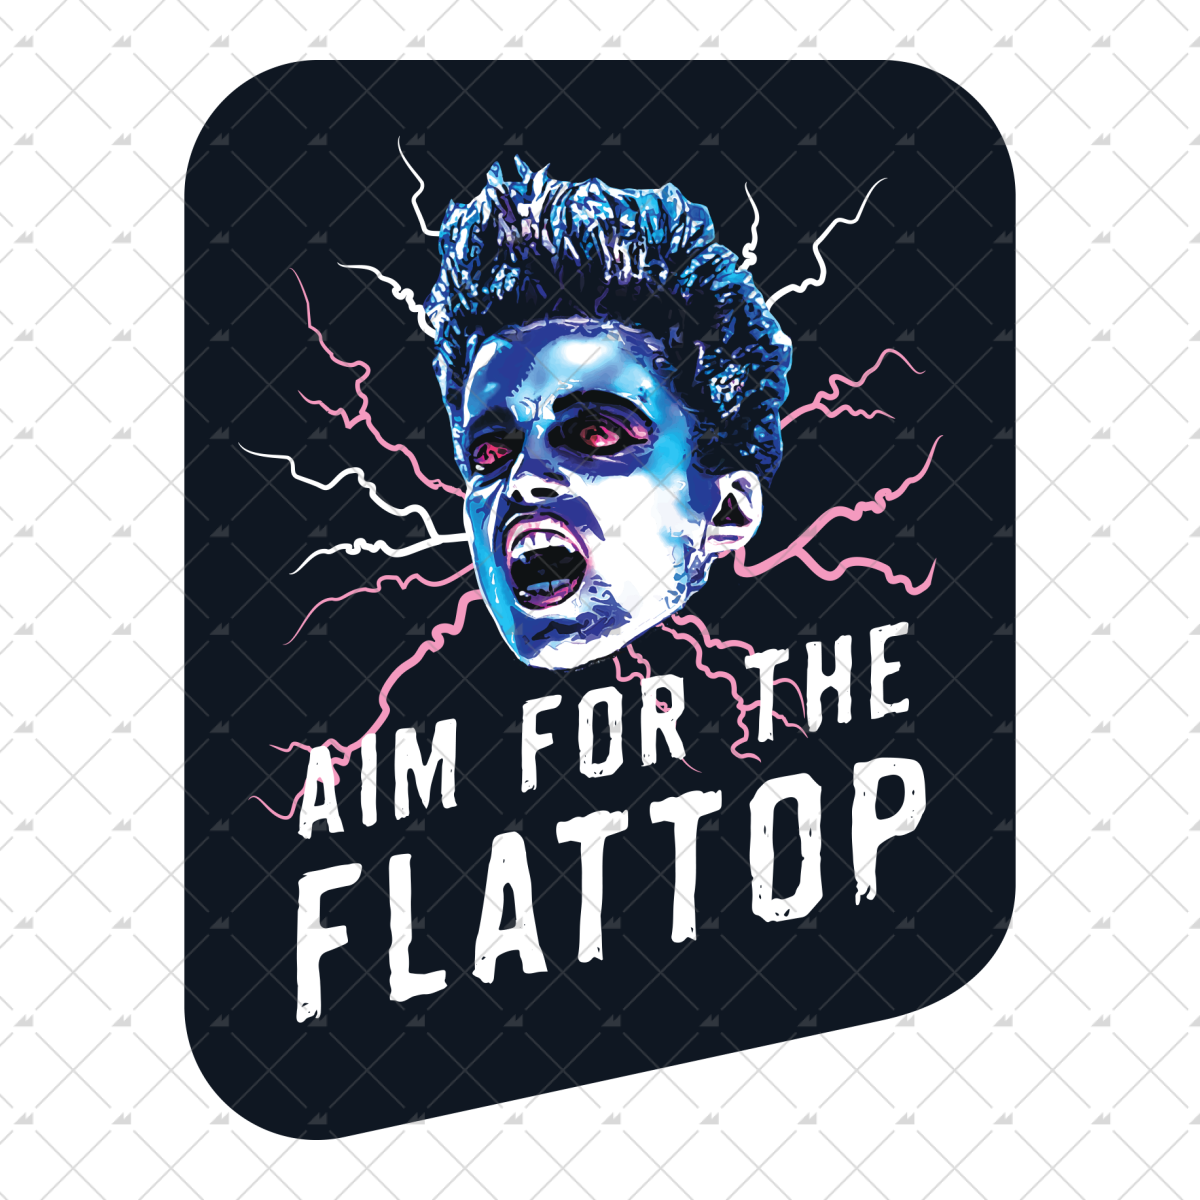 Aim For The Flattop - Sticker